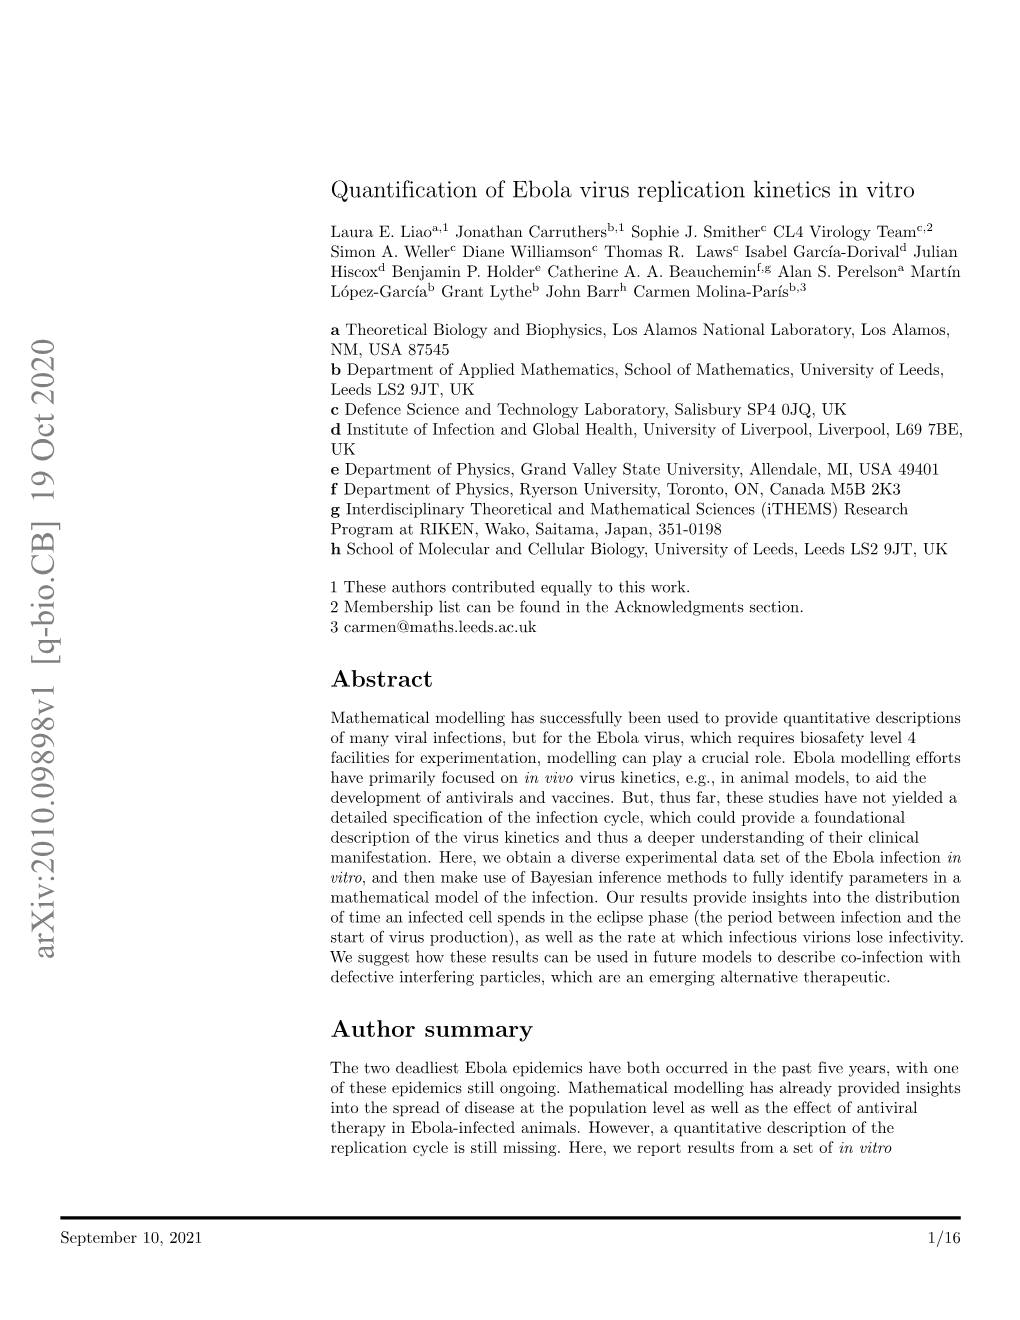 Quantification of Ebola Virus Replication Kinetics in Vitro